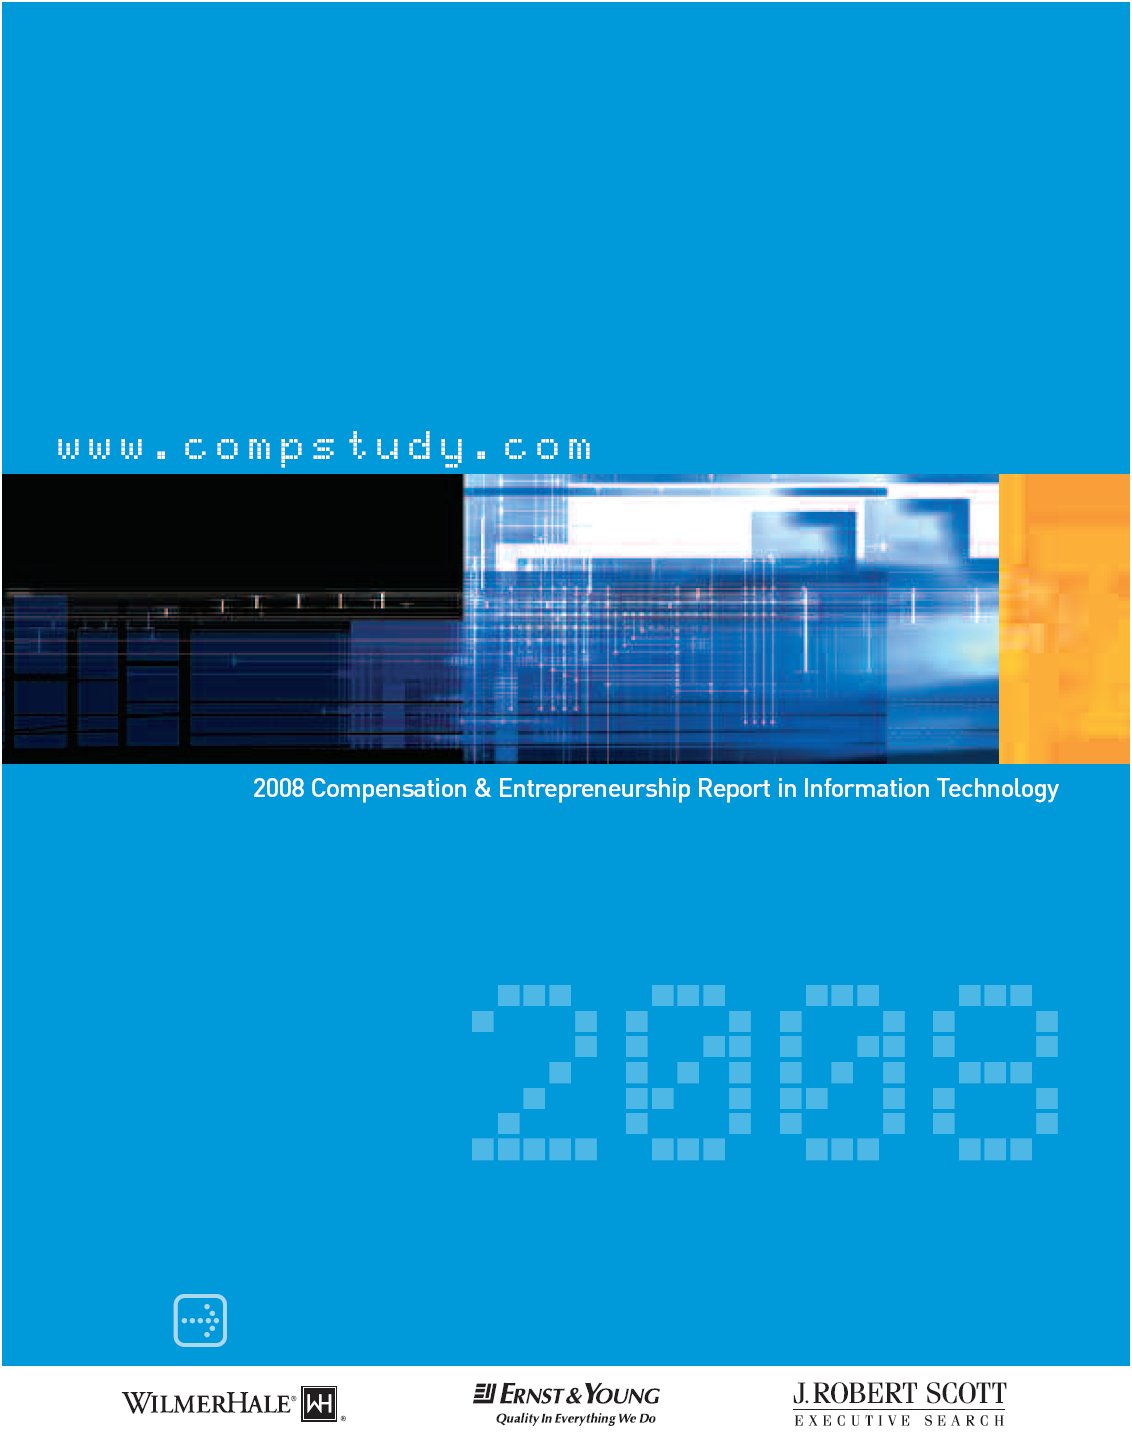 2008compstudy